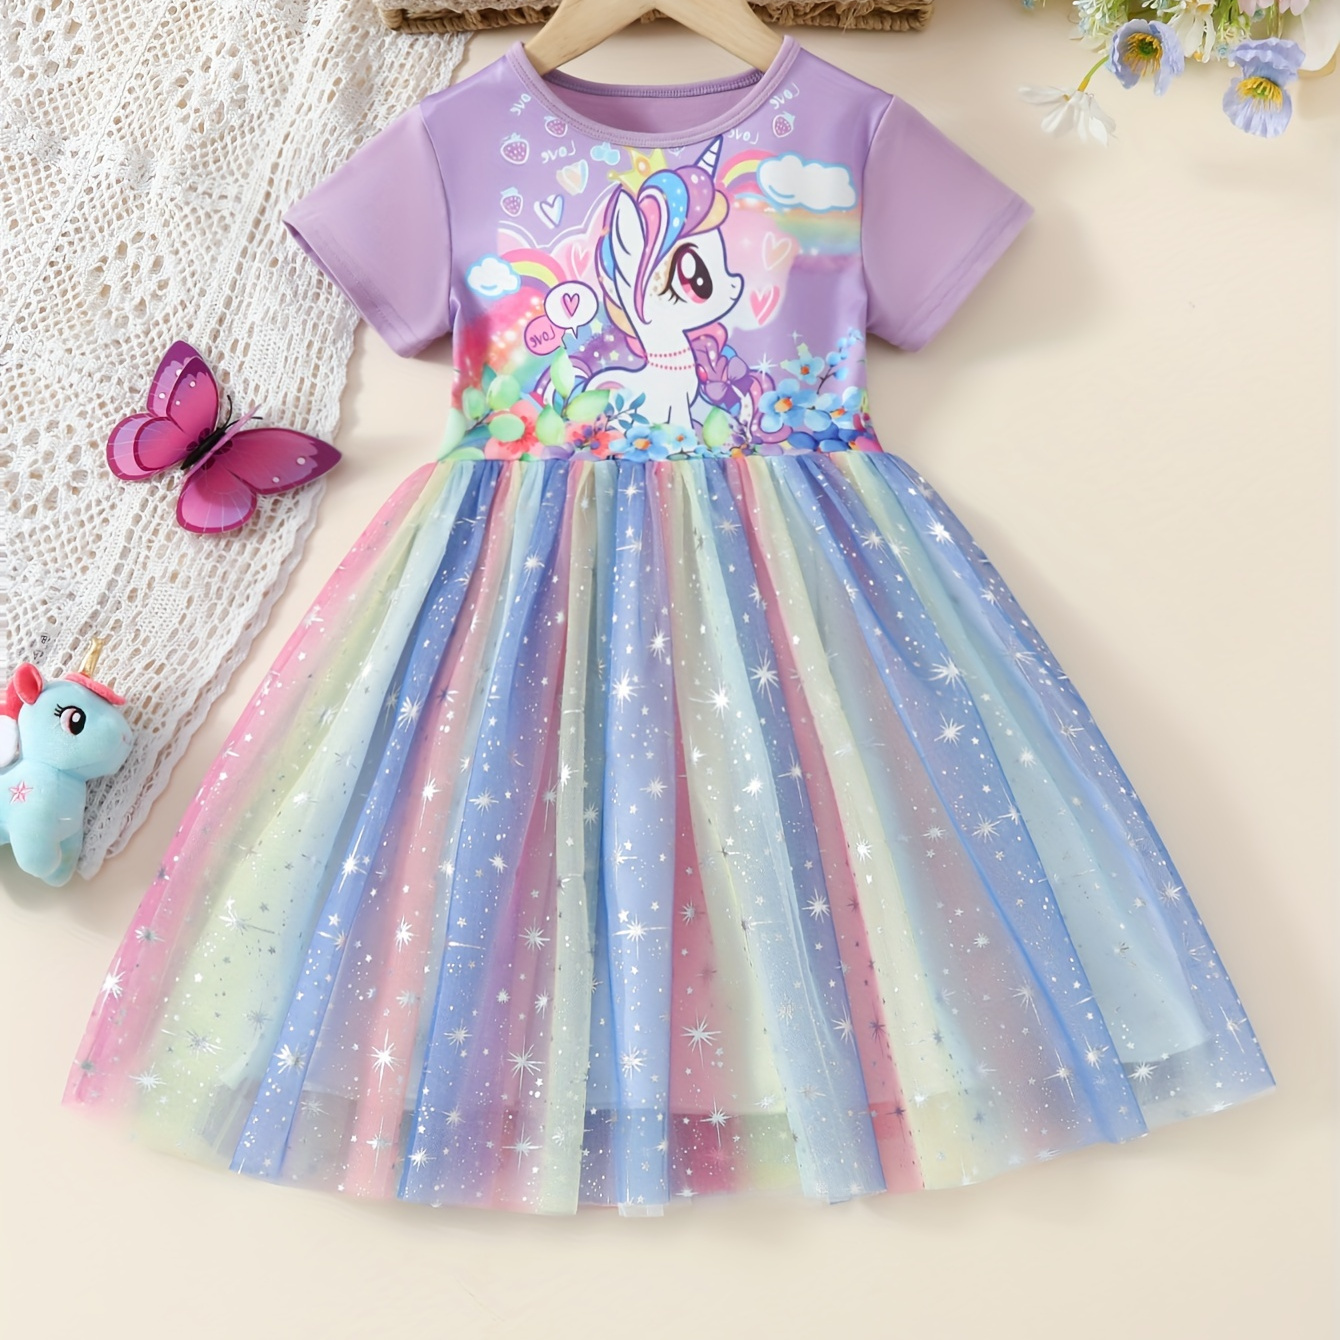 

Girls Dreamy Unicorn Graphic Flutter Trim Princess Tutu Dress Mesh Dress Party Summer